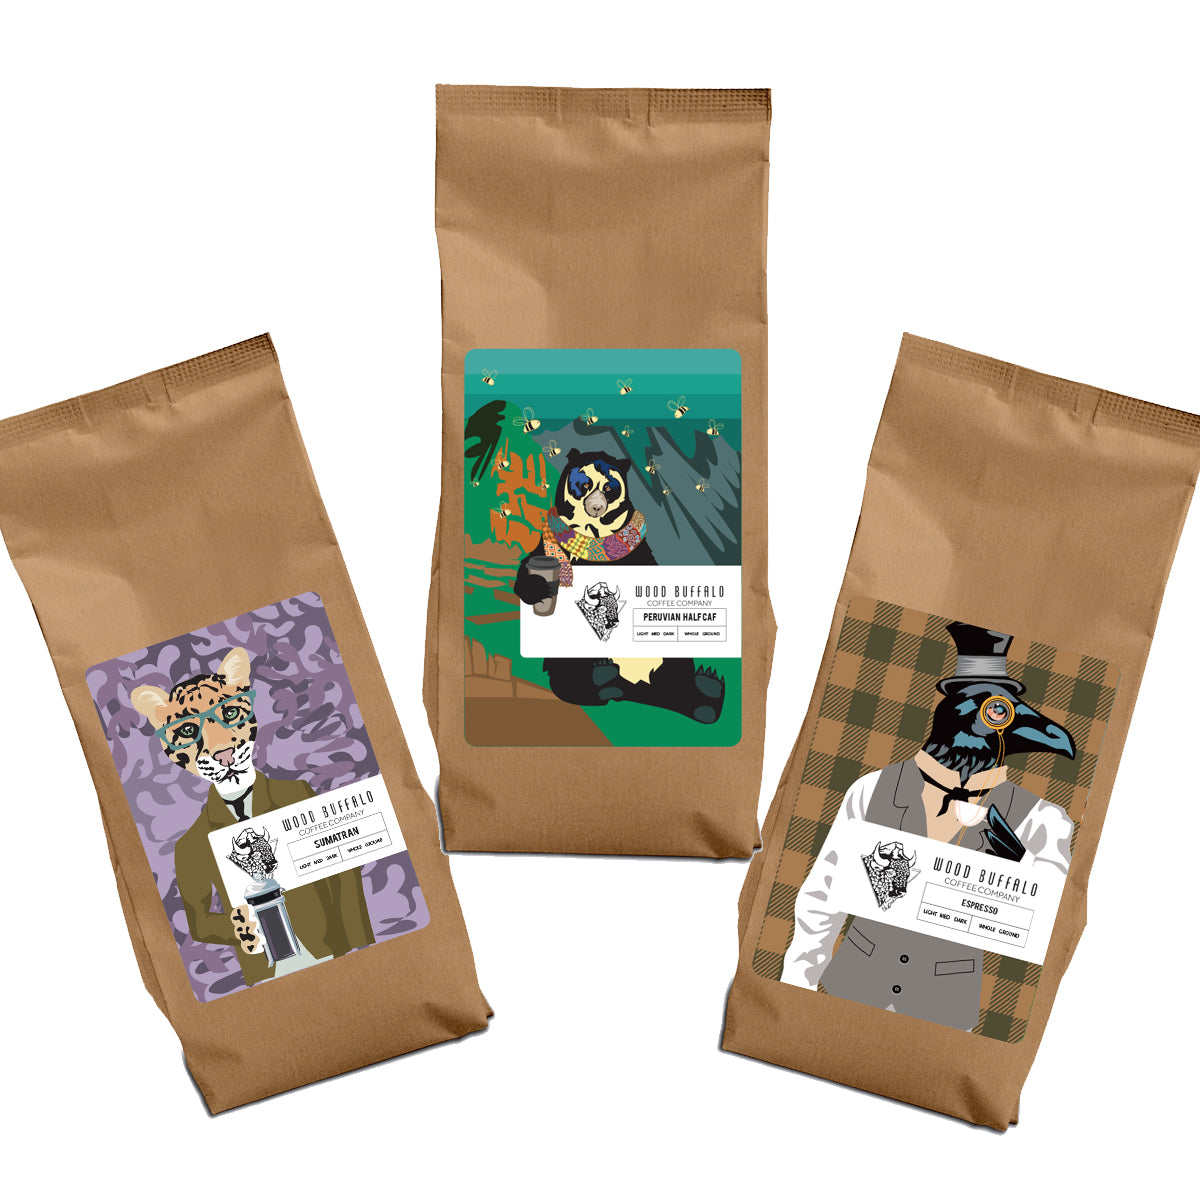 3-pack sampler sumatra, peruvian decaf, espresso coffee bags